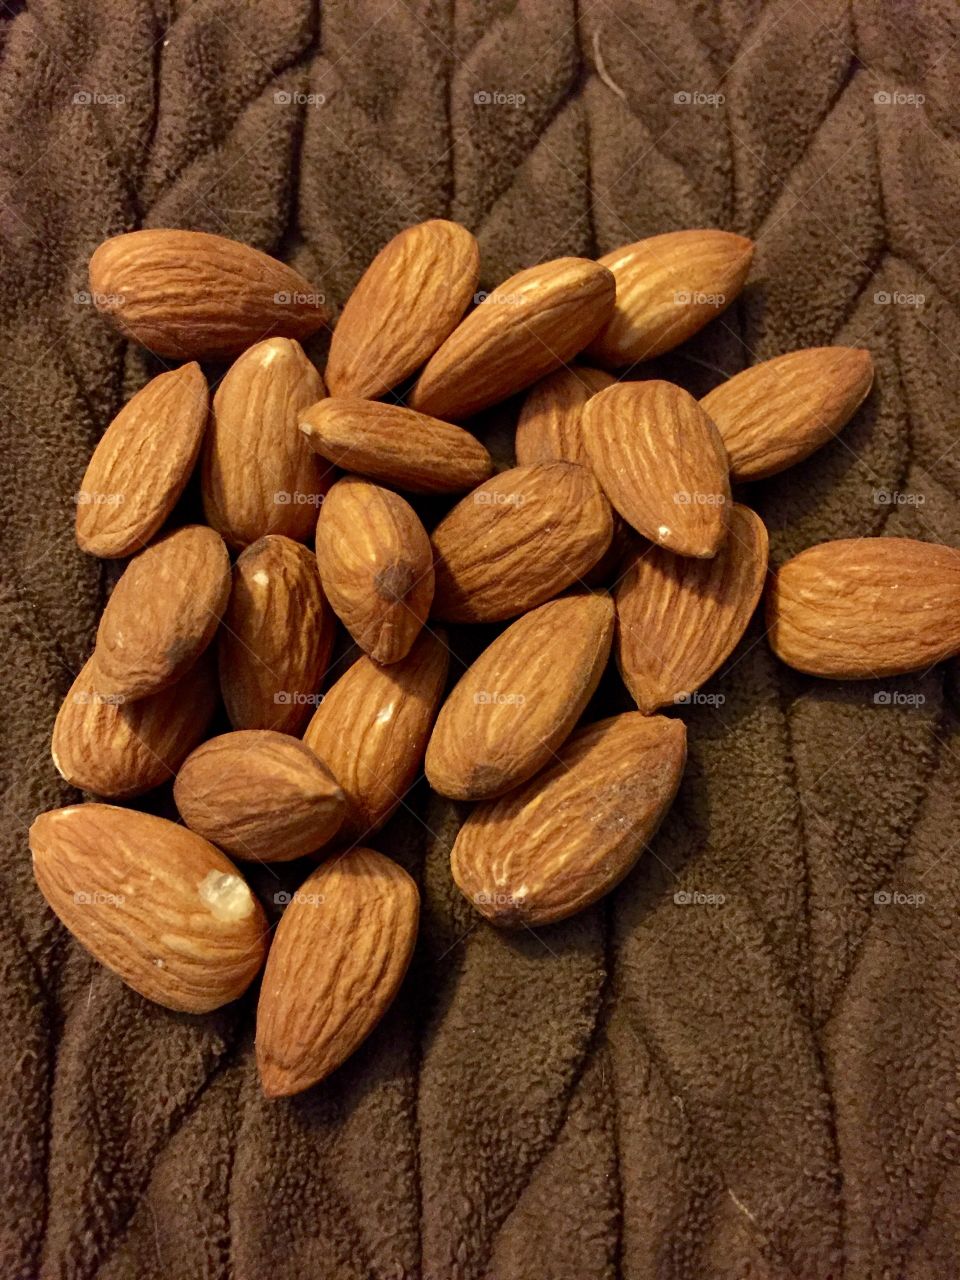 Almonds are a thyroids best friend